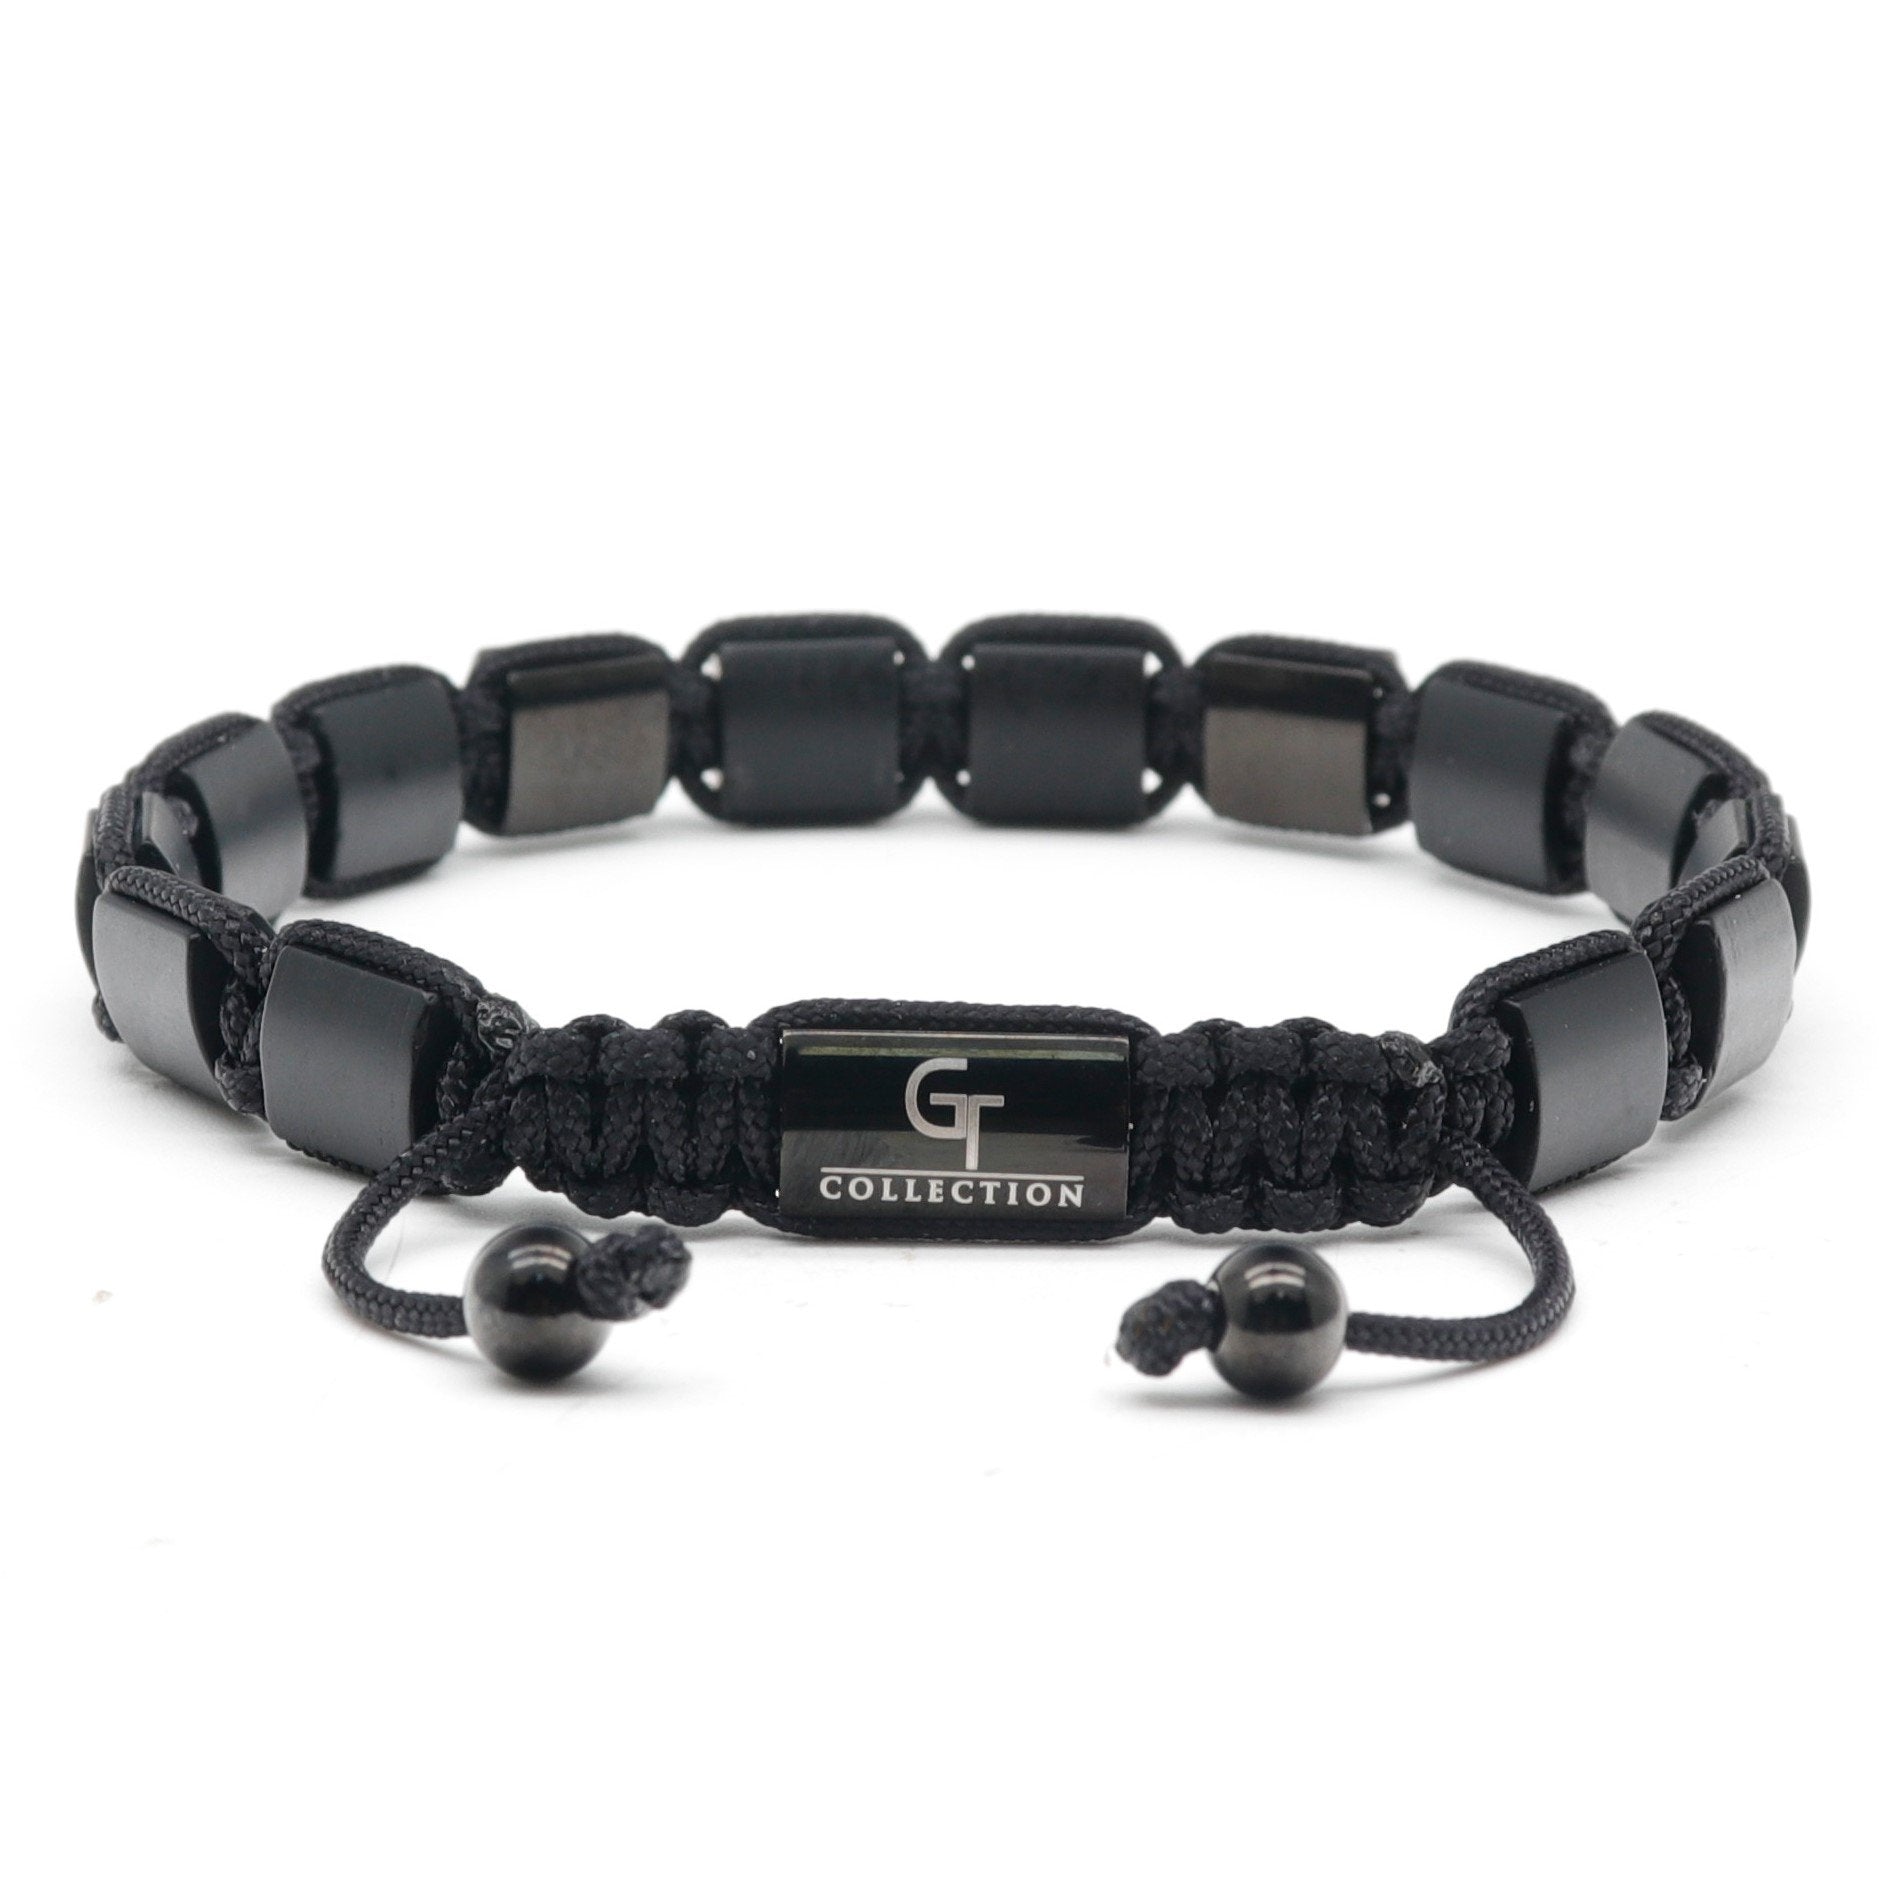 Bracelet - MATTE ONYX Flatbead Bracelet - Black Gemstones & Black CZ Bead